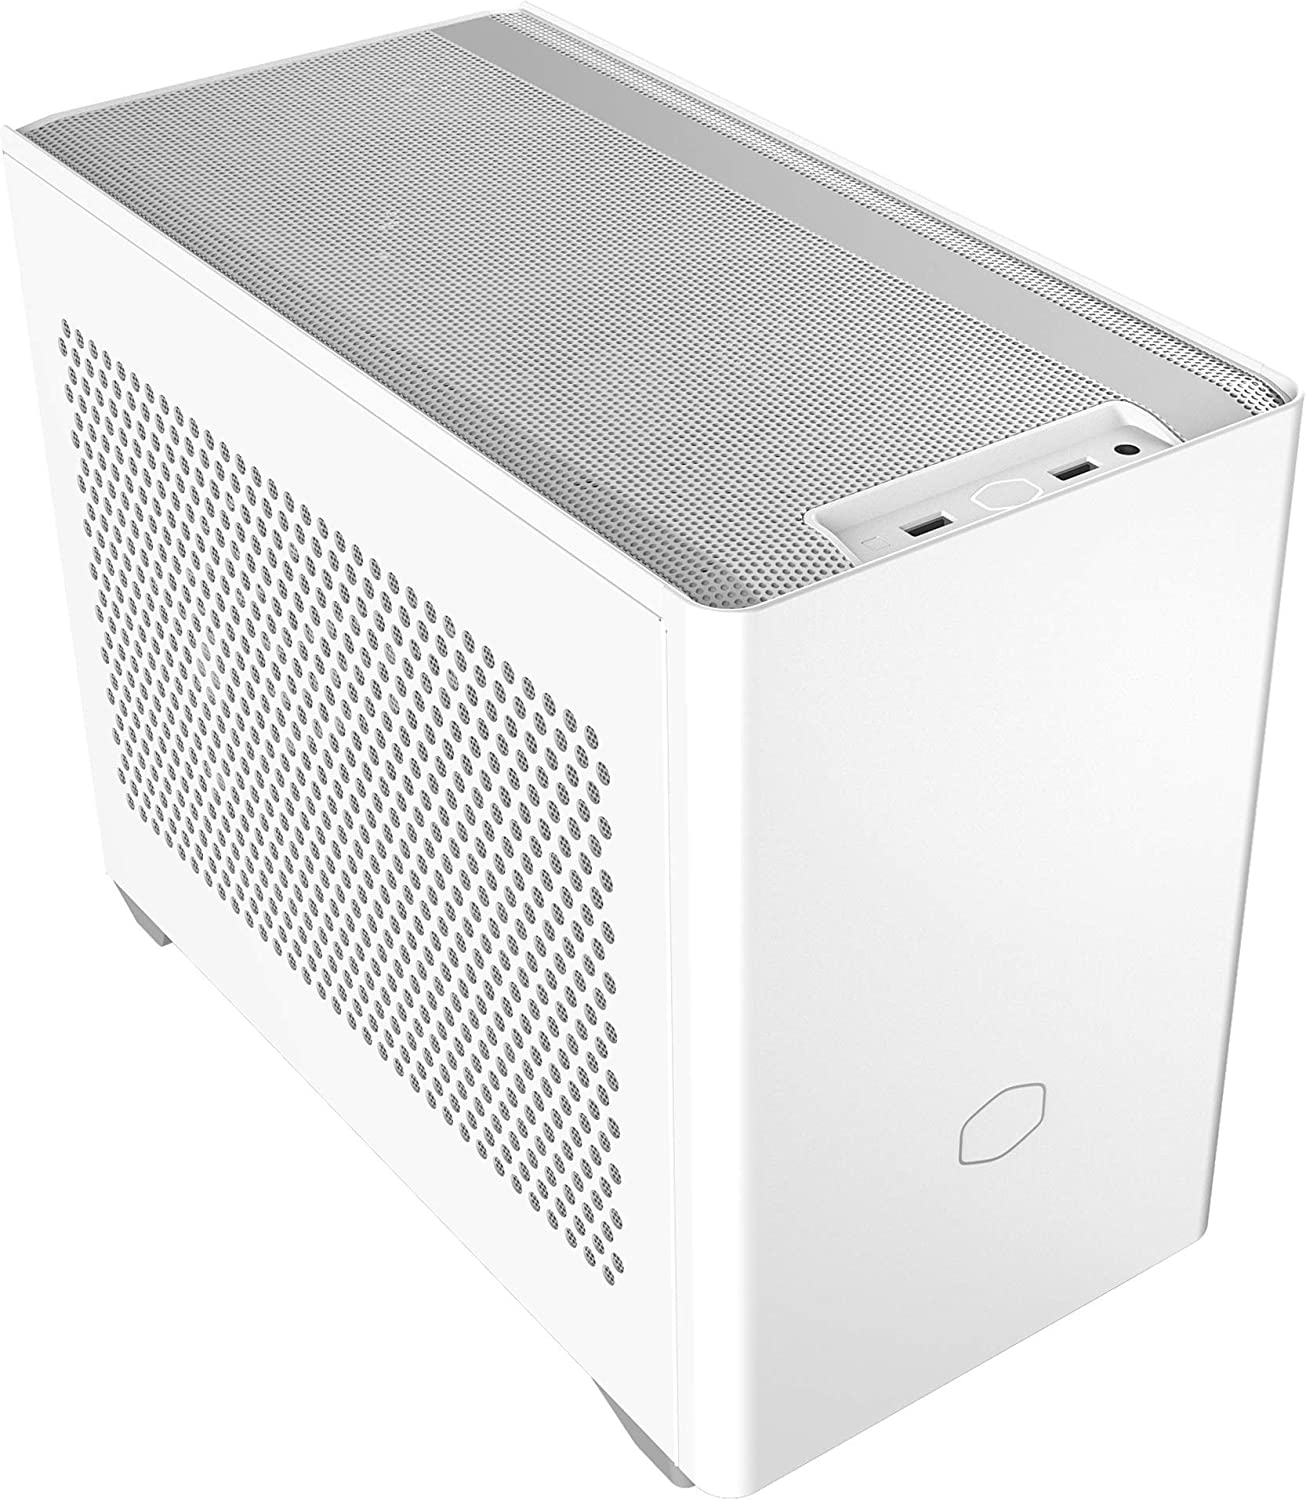 Amazon.com: Cooler Master NR200 White/Black SFF - $9.99 after rebate